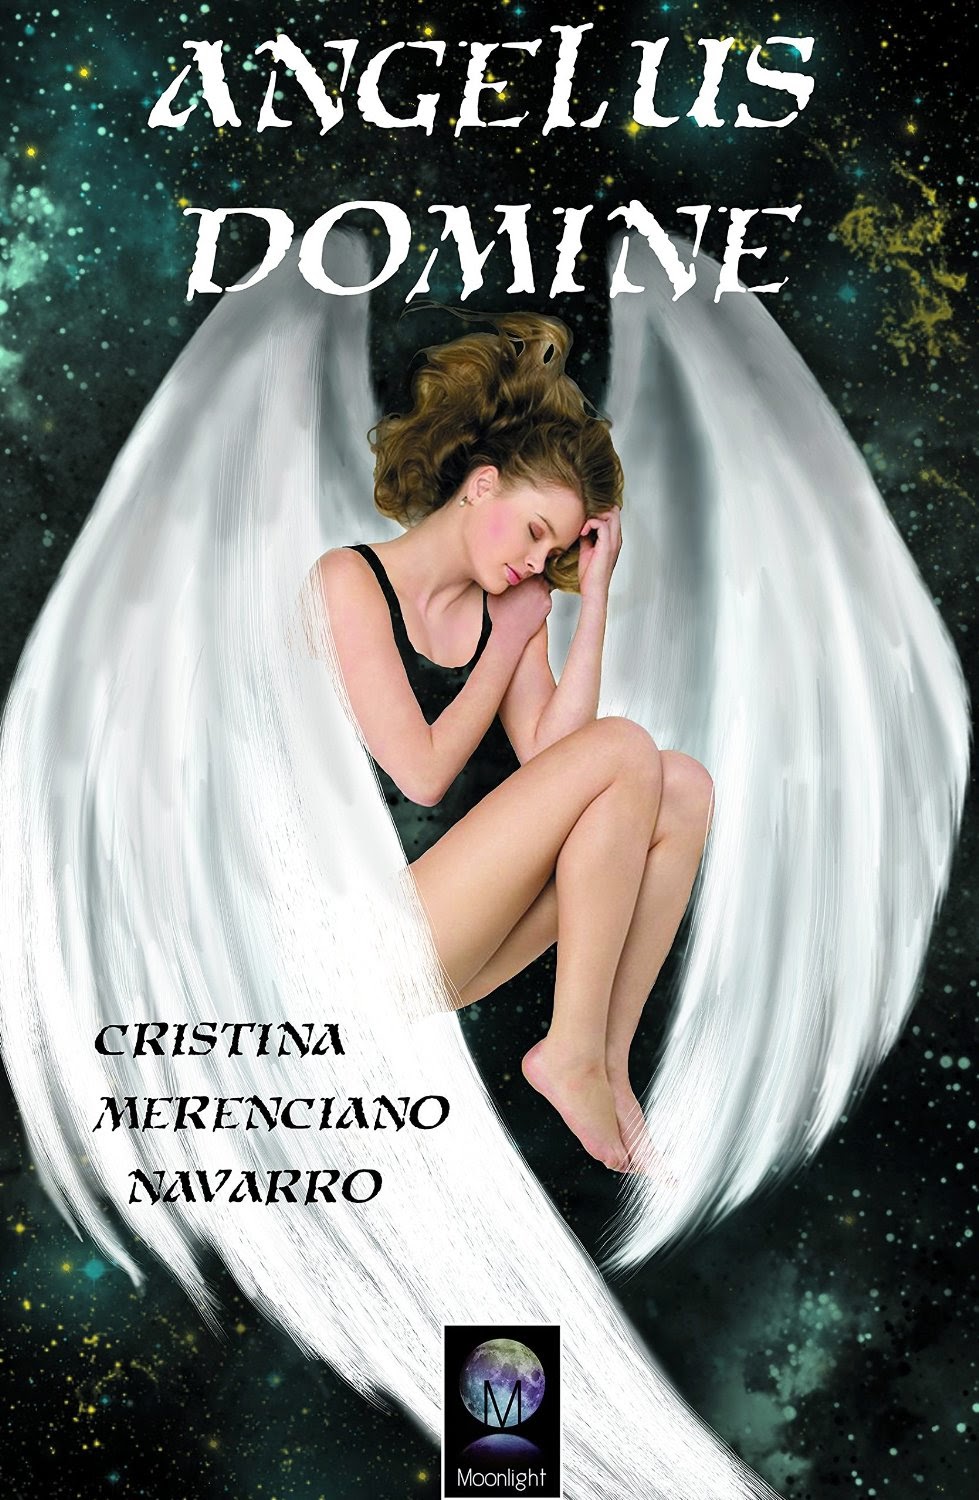 Libro de audio Angelus Domine: Mi Ángel [1] – Cristina Merenciano Navarro